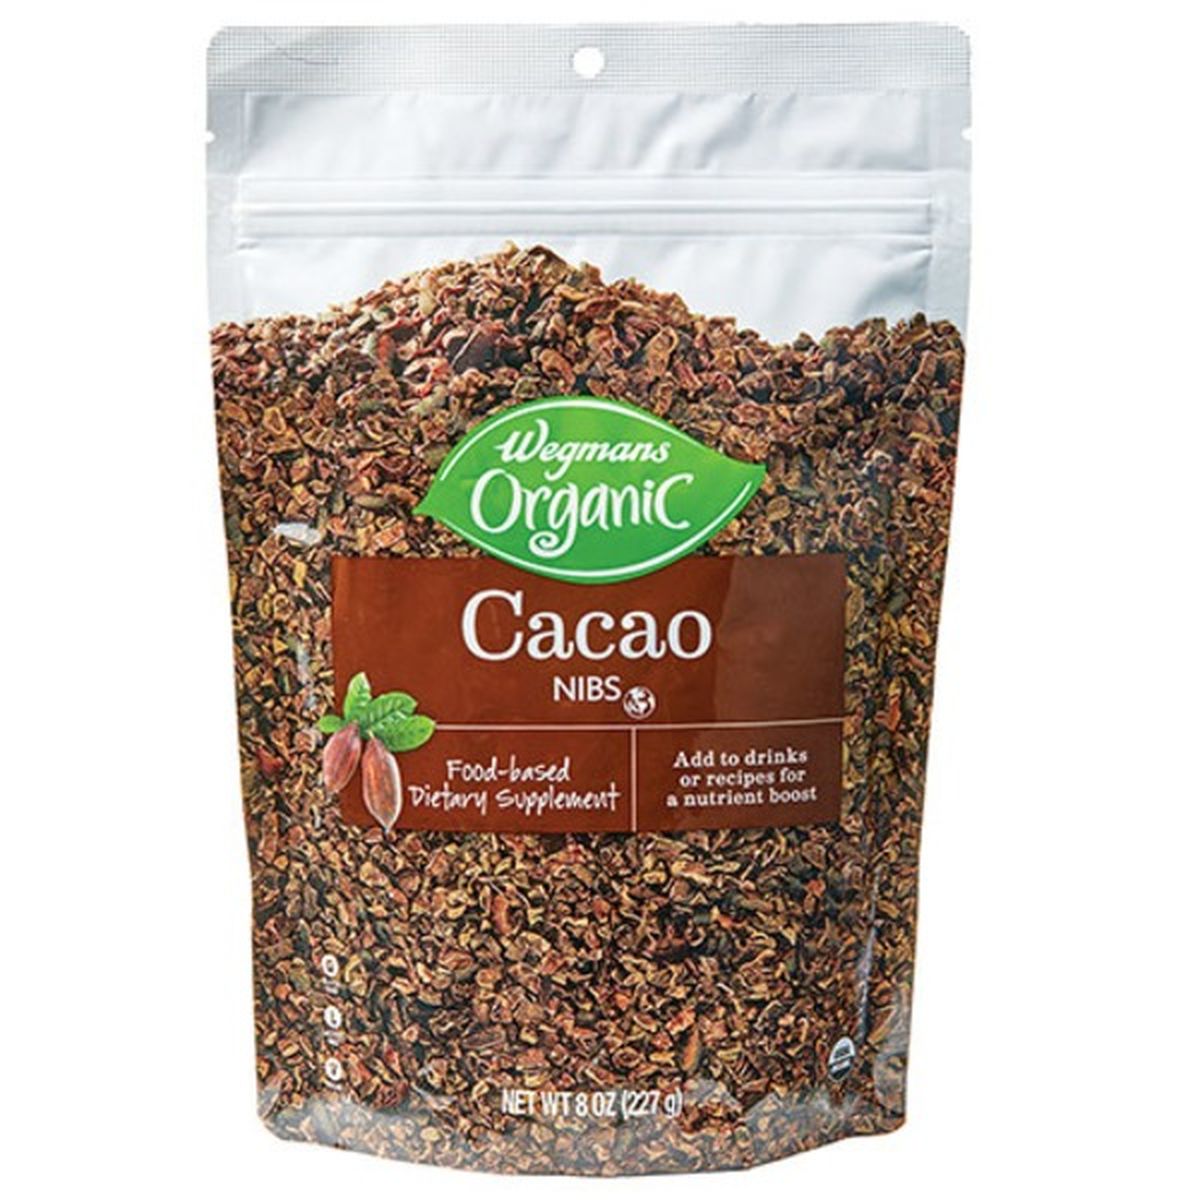 Calories in Wegmans Organic Cacao Nibs